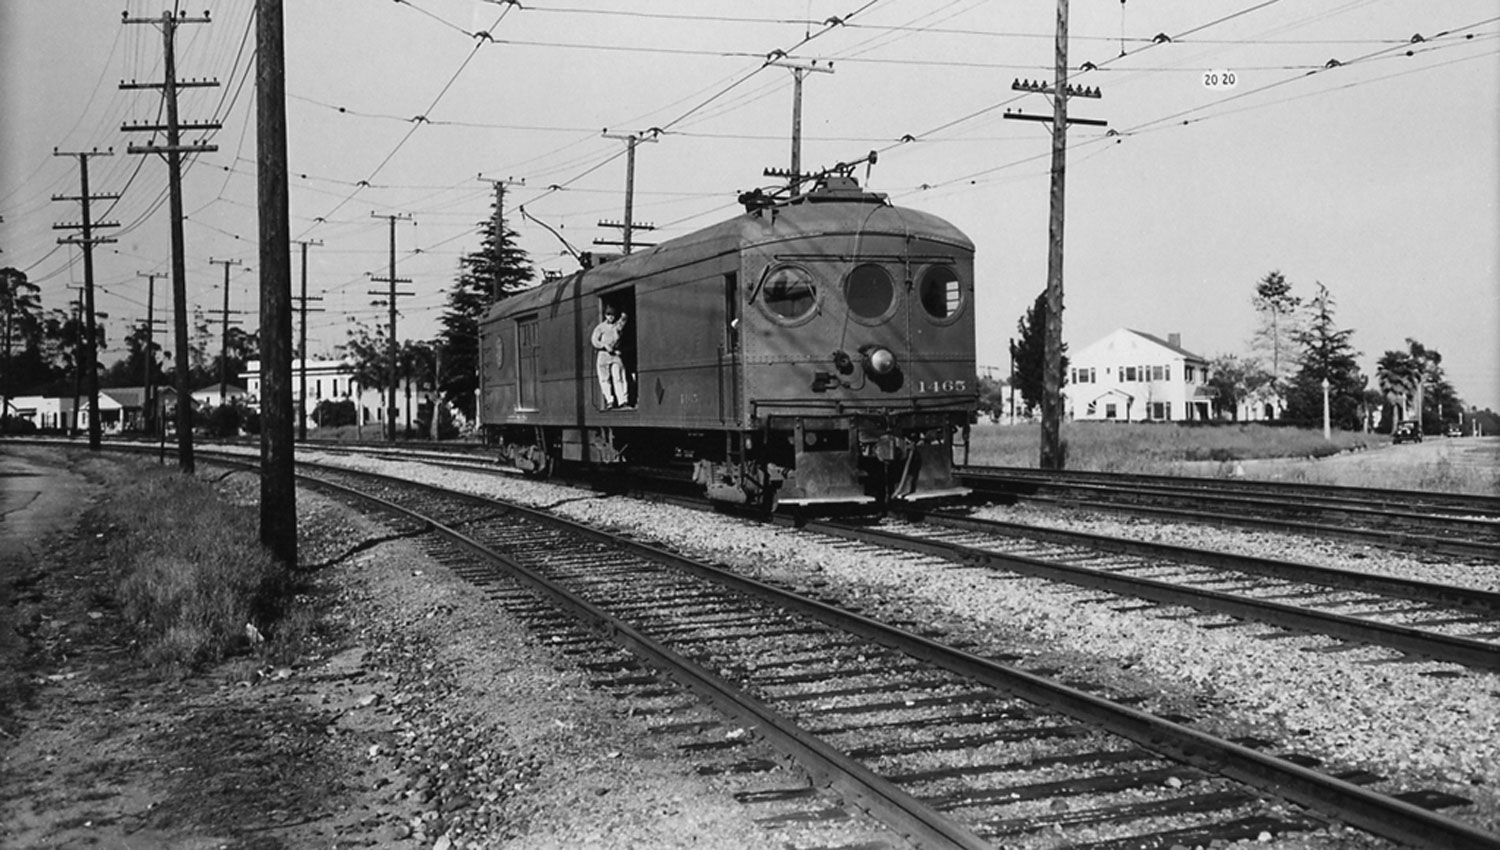 1465 Near Sierra Vista - Pacific Electric Railway Historical Society